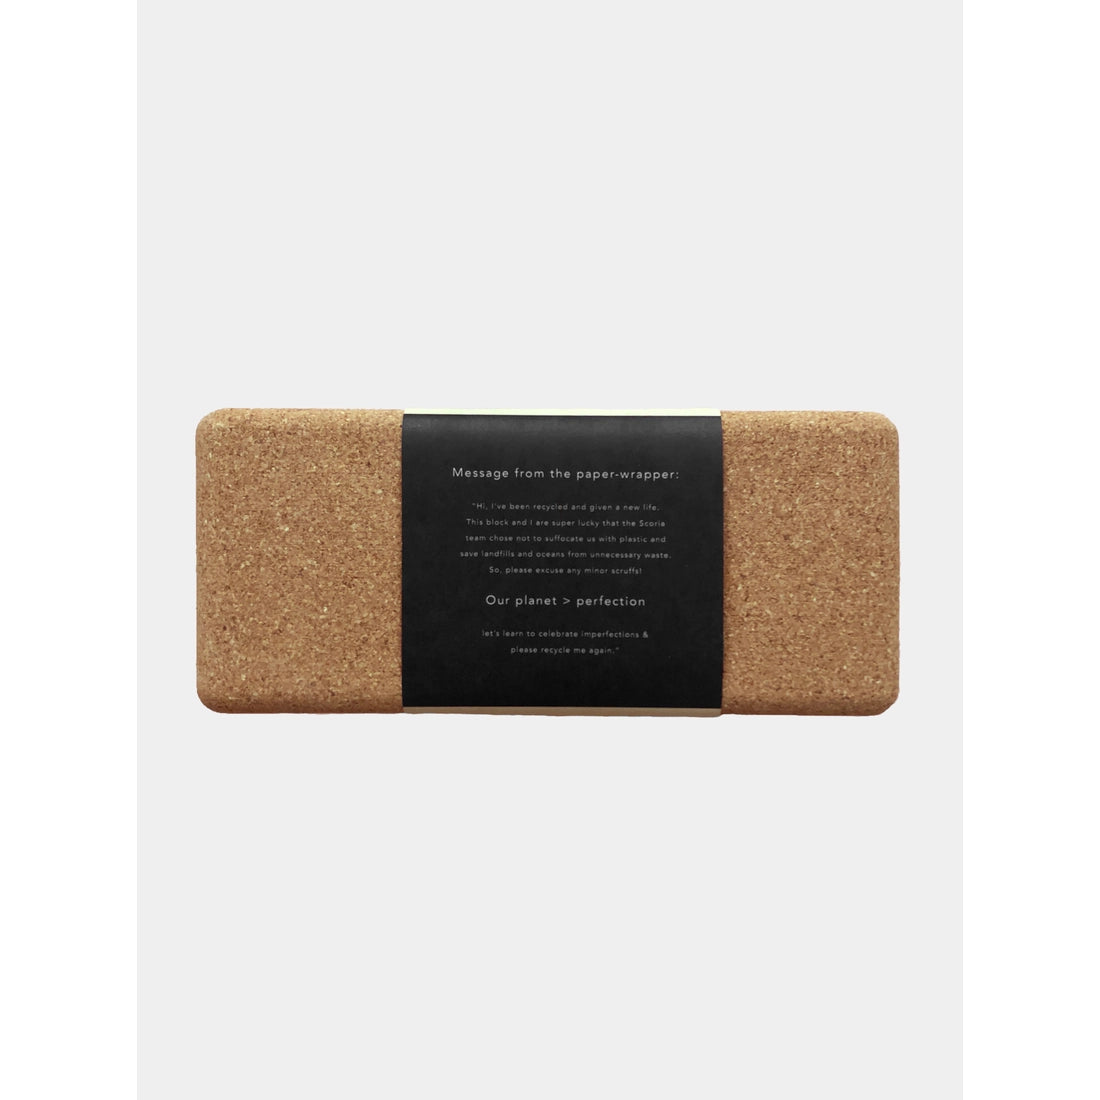 Moon Cork Brick (100% Natural Cork Yoga Block)